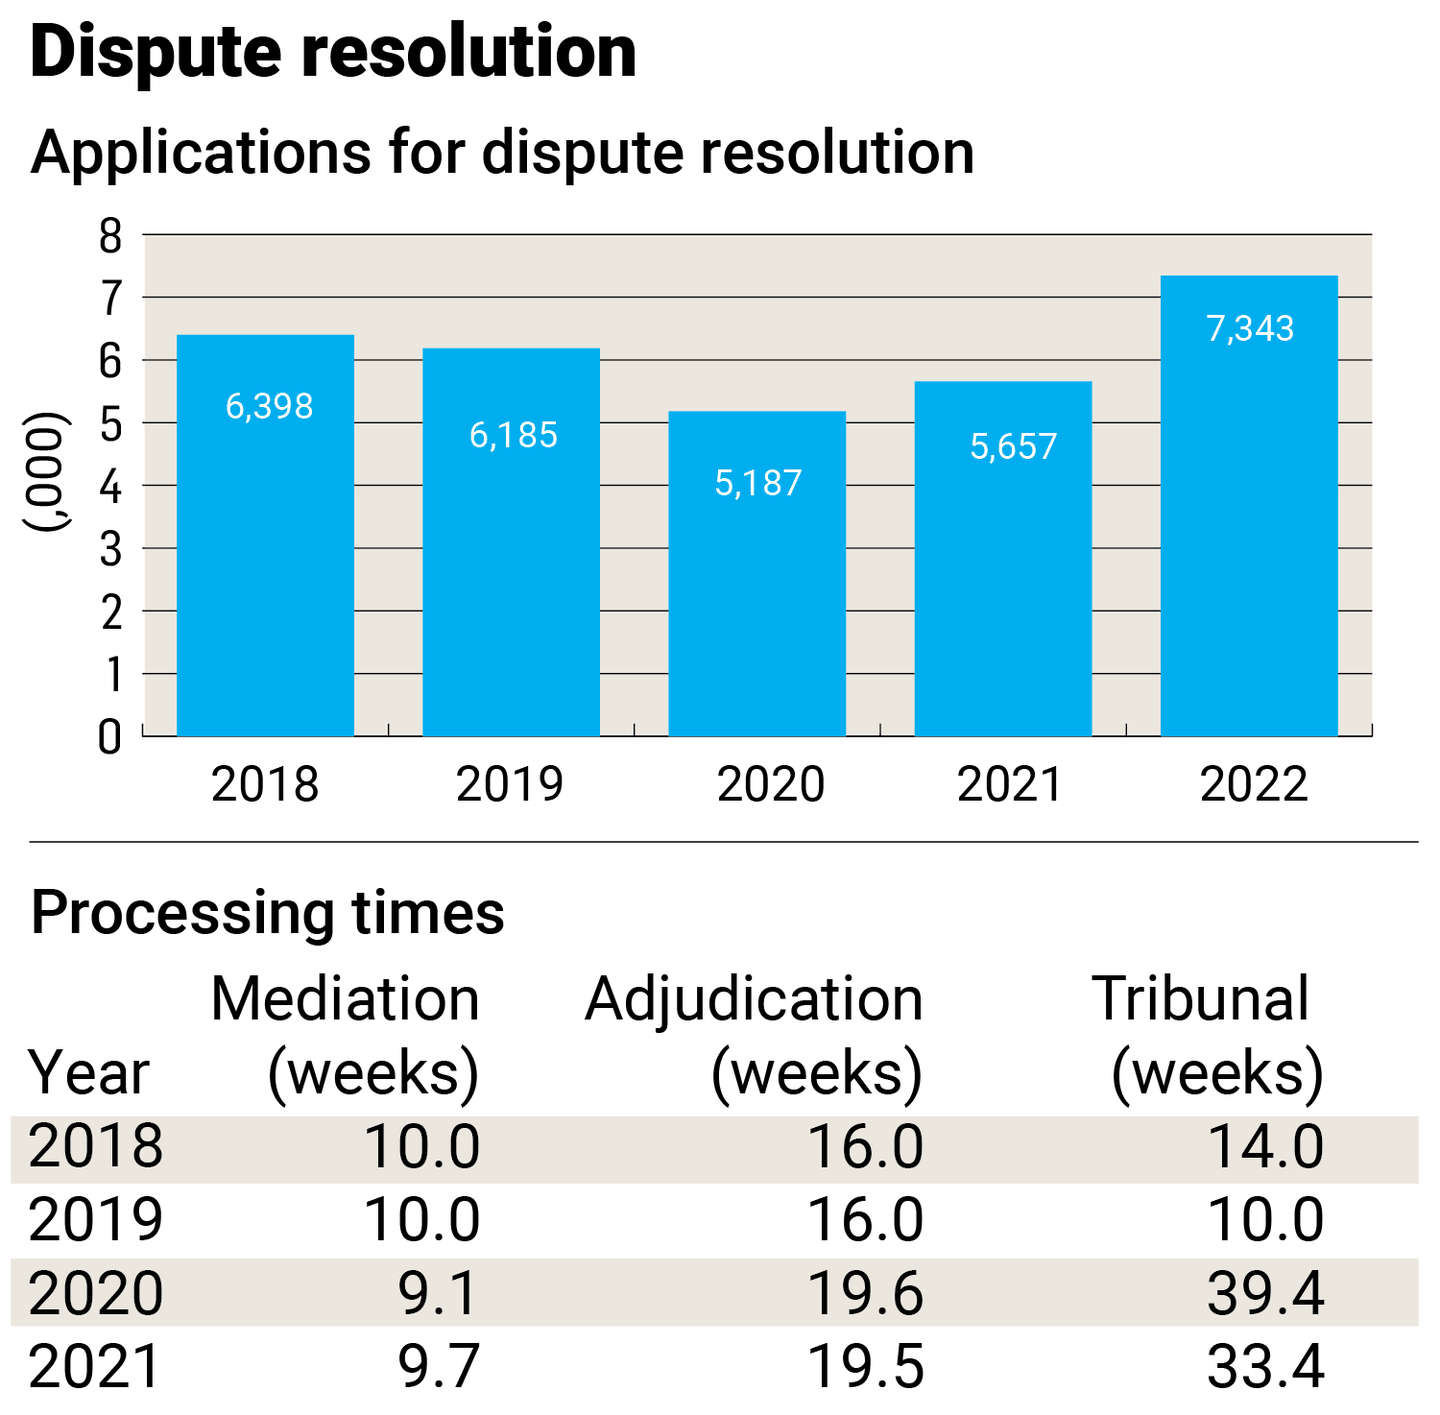 Dispute resolution